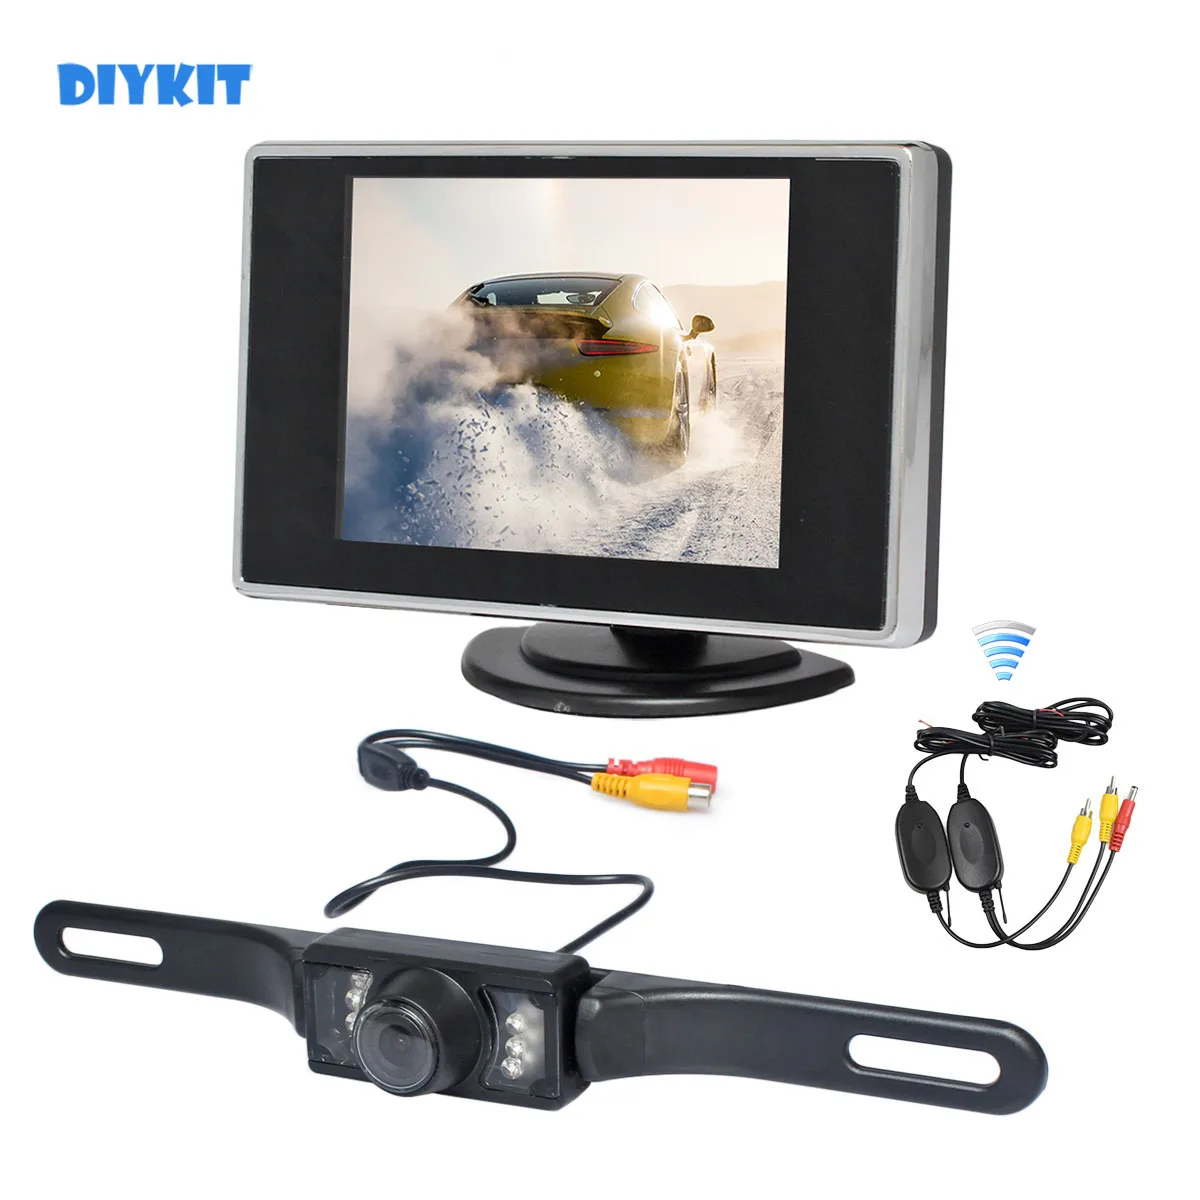 DIYKIT Wireless 3.5 inch TFT LCD Car Monitor Rear View Kit Reversing IR Camera Parking Assistance System